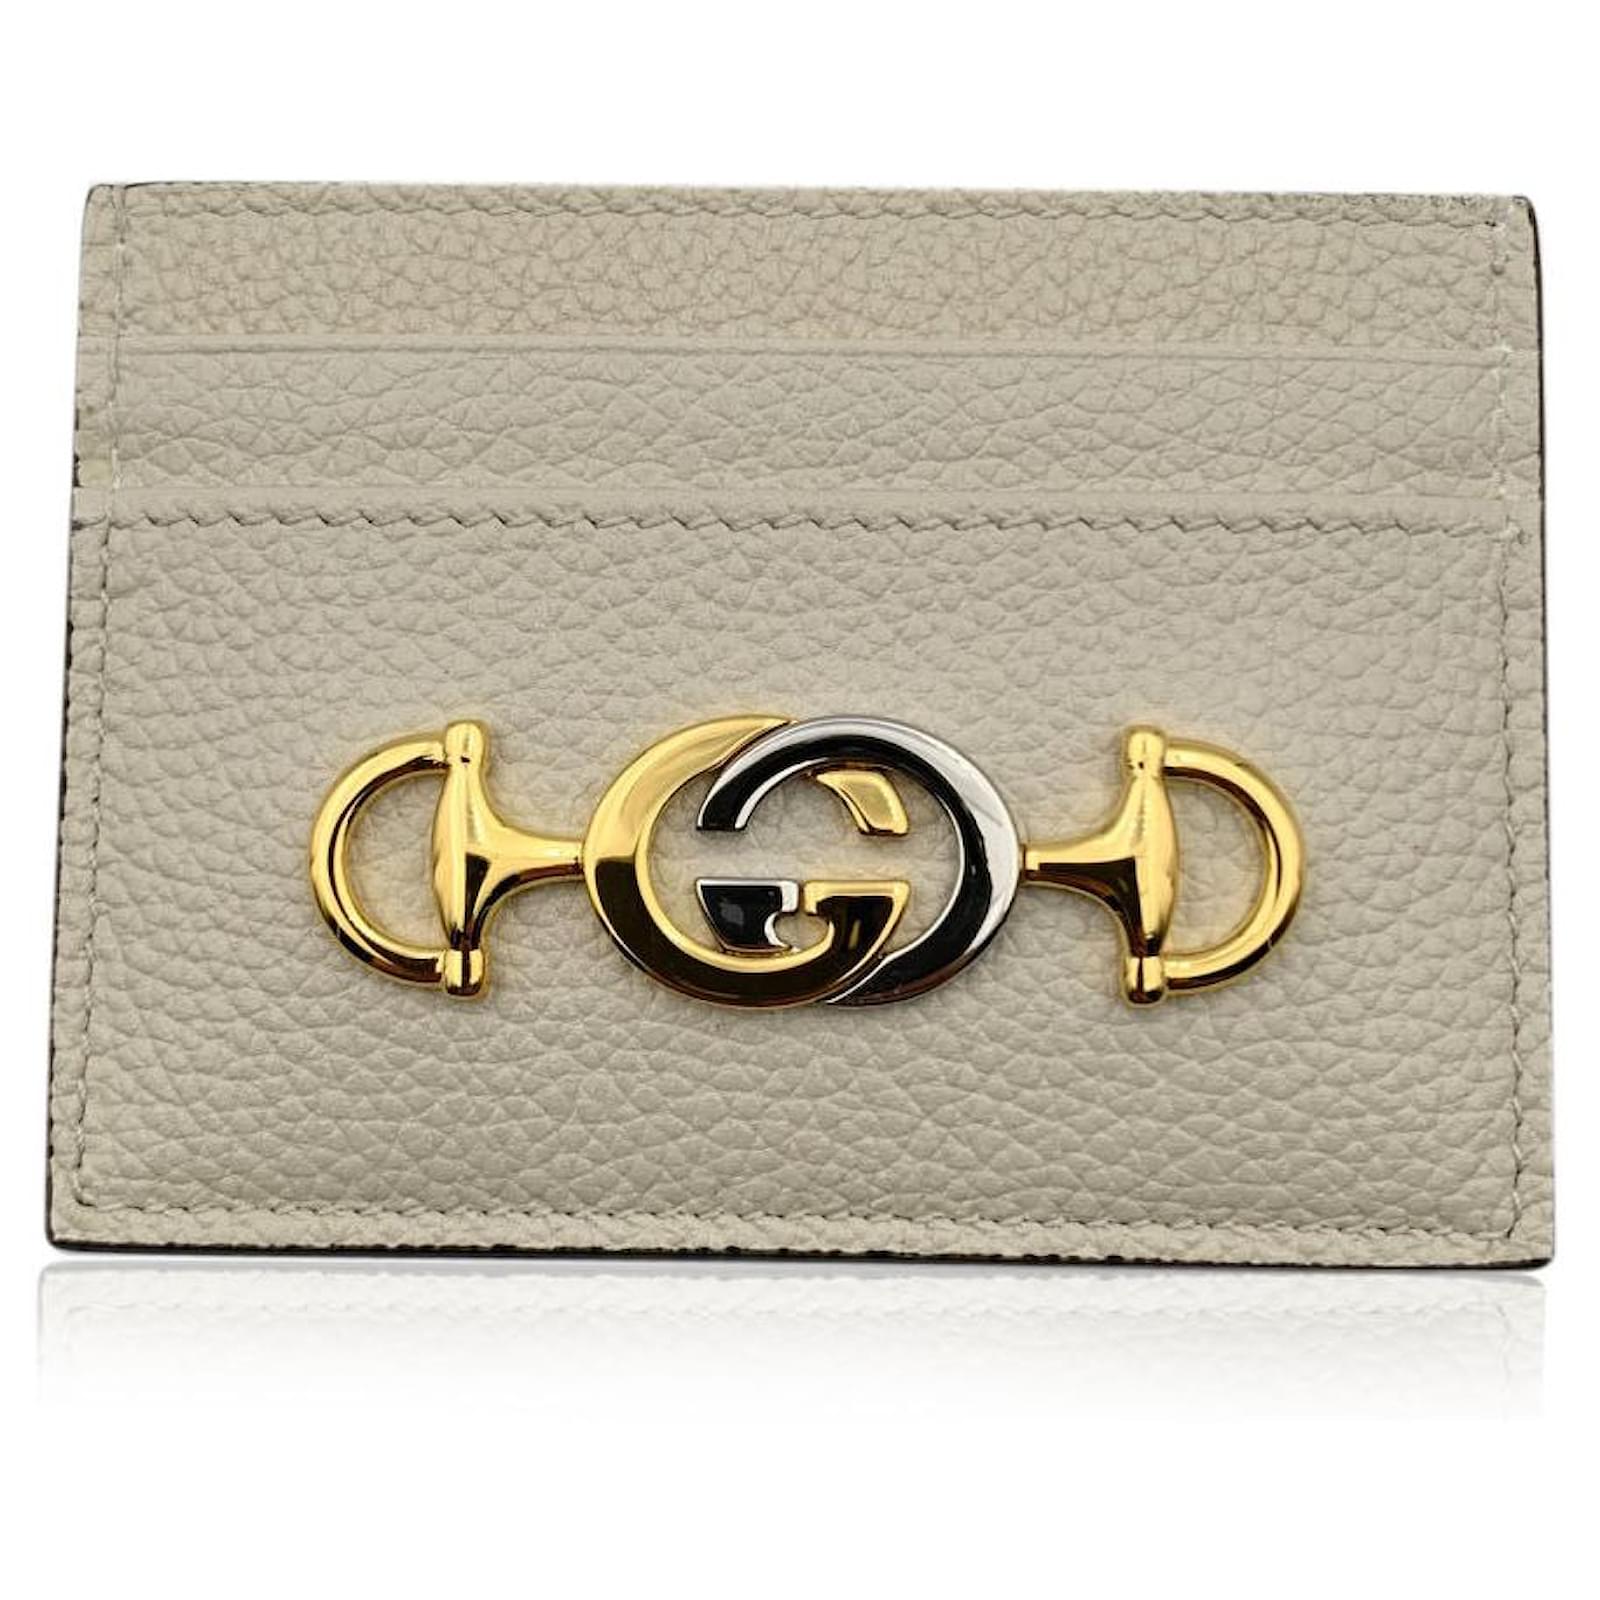 Gucci White Leather Zumi Horsebit Credit Card Case Holder Wallet